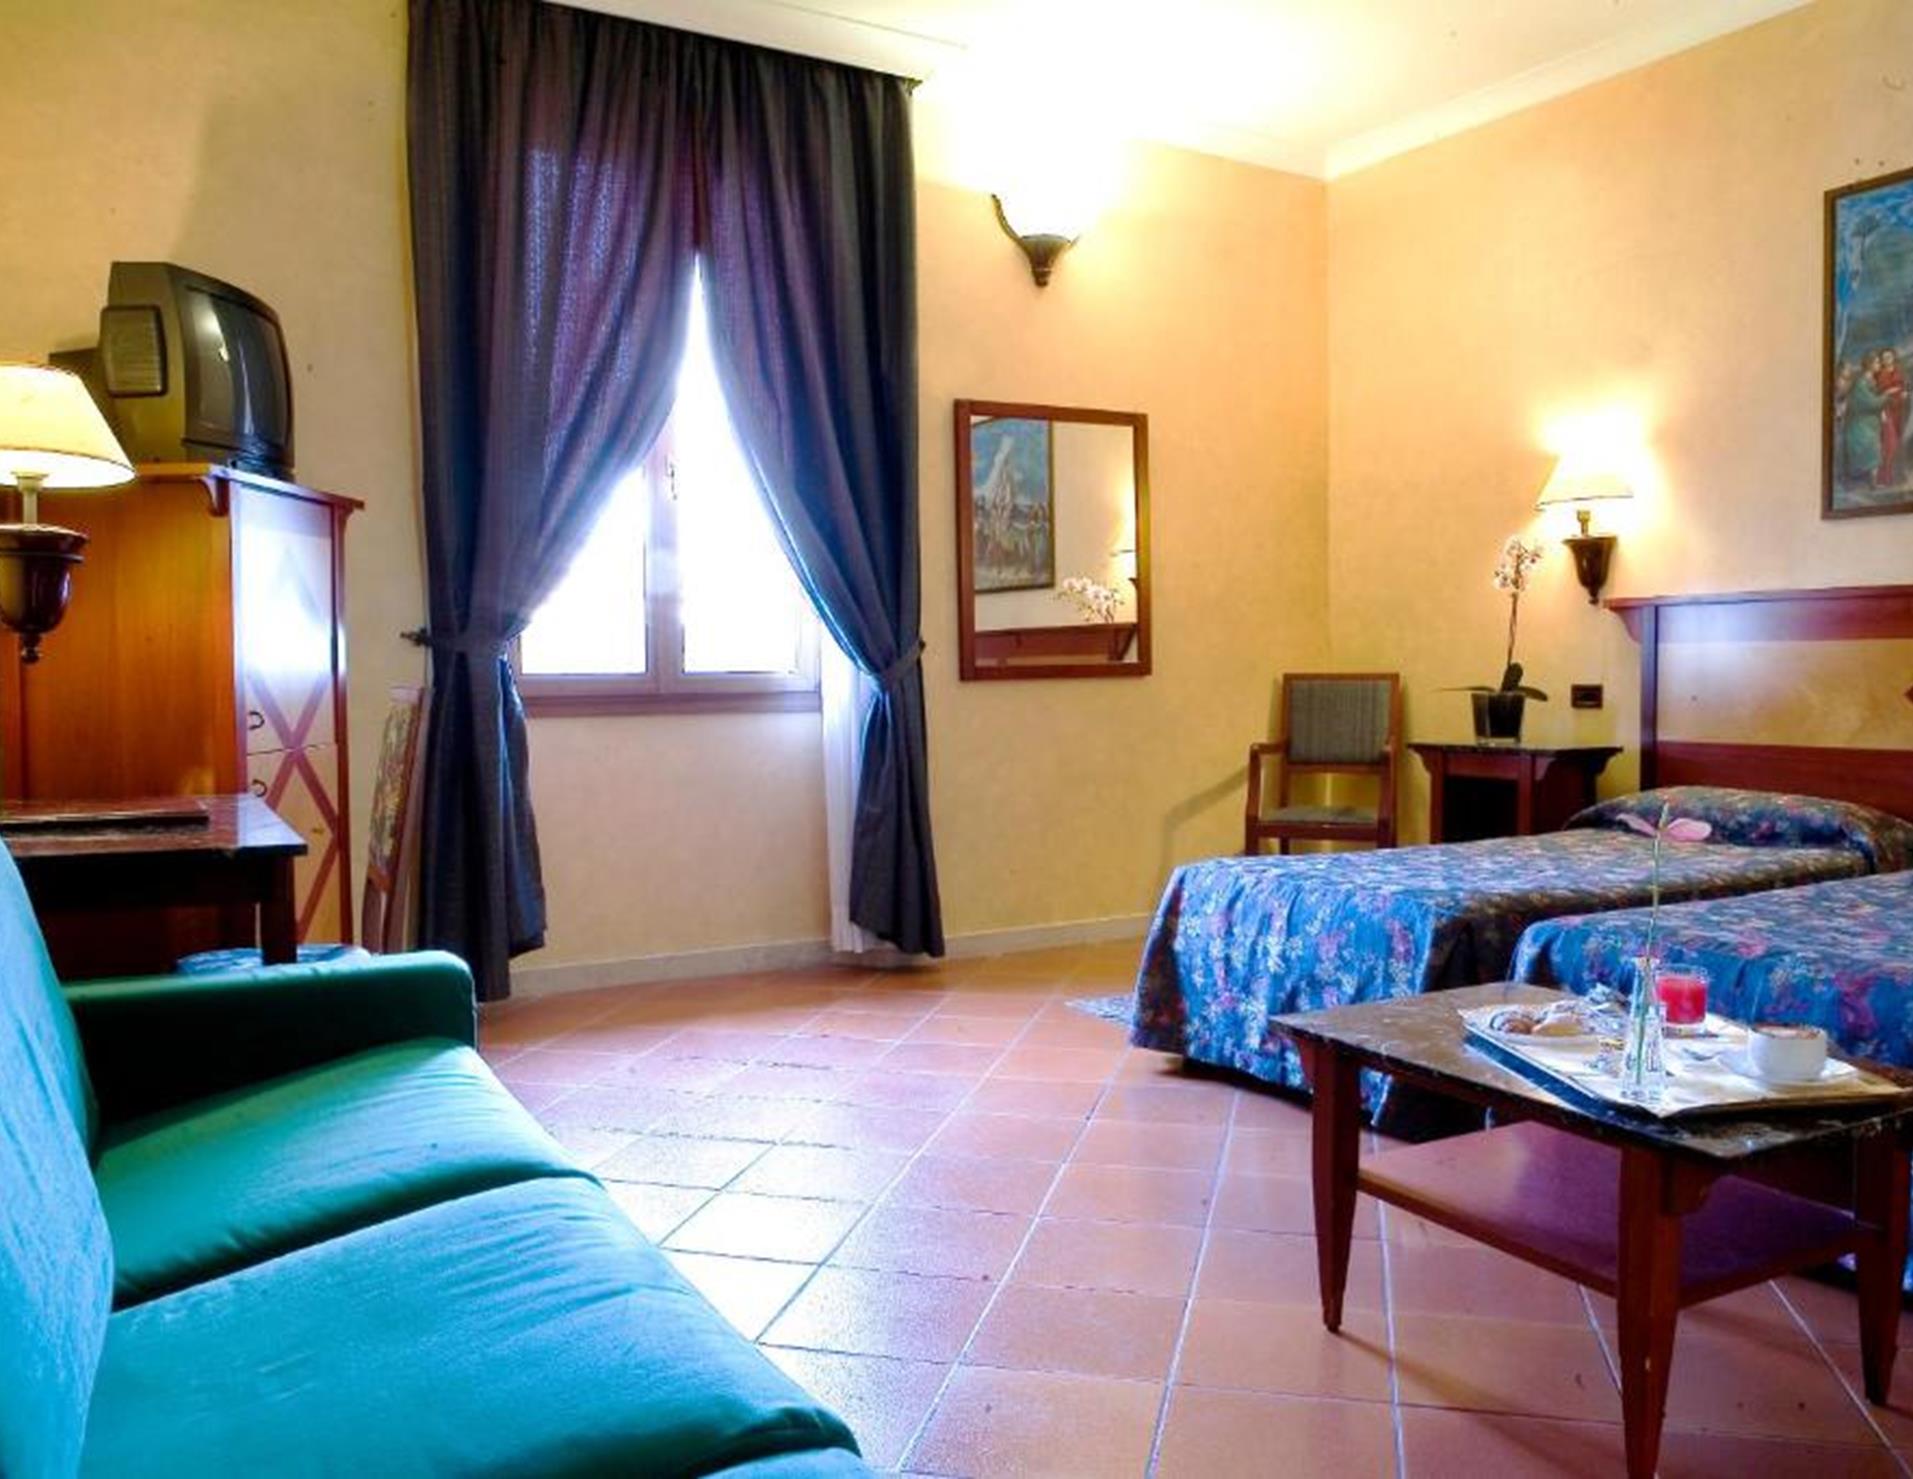 Hotel Corona d'Italia - Room 2